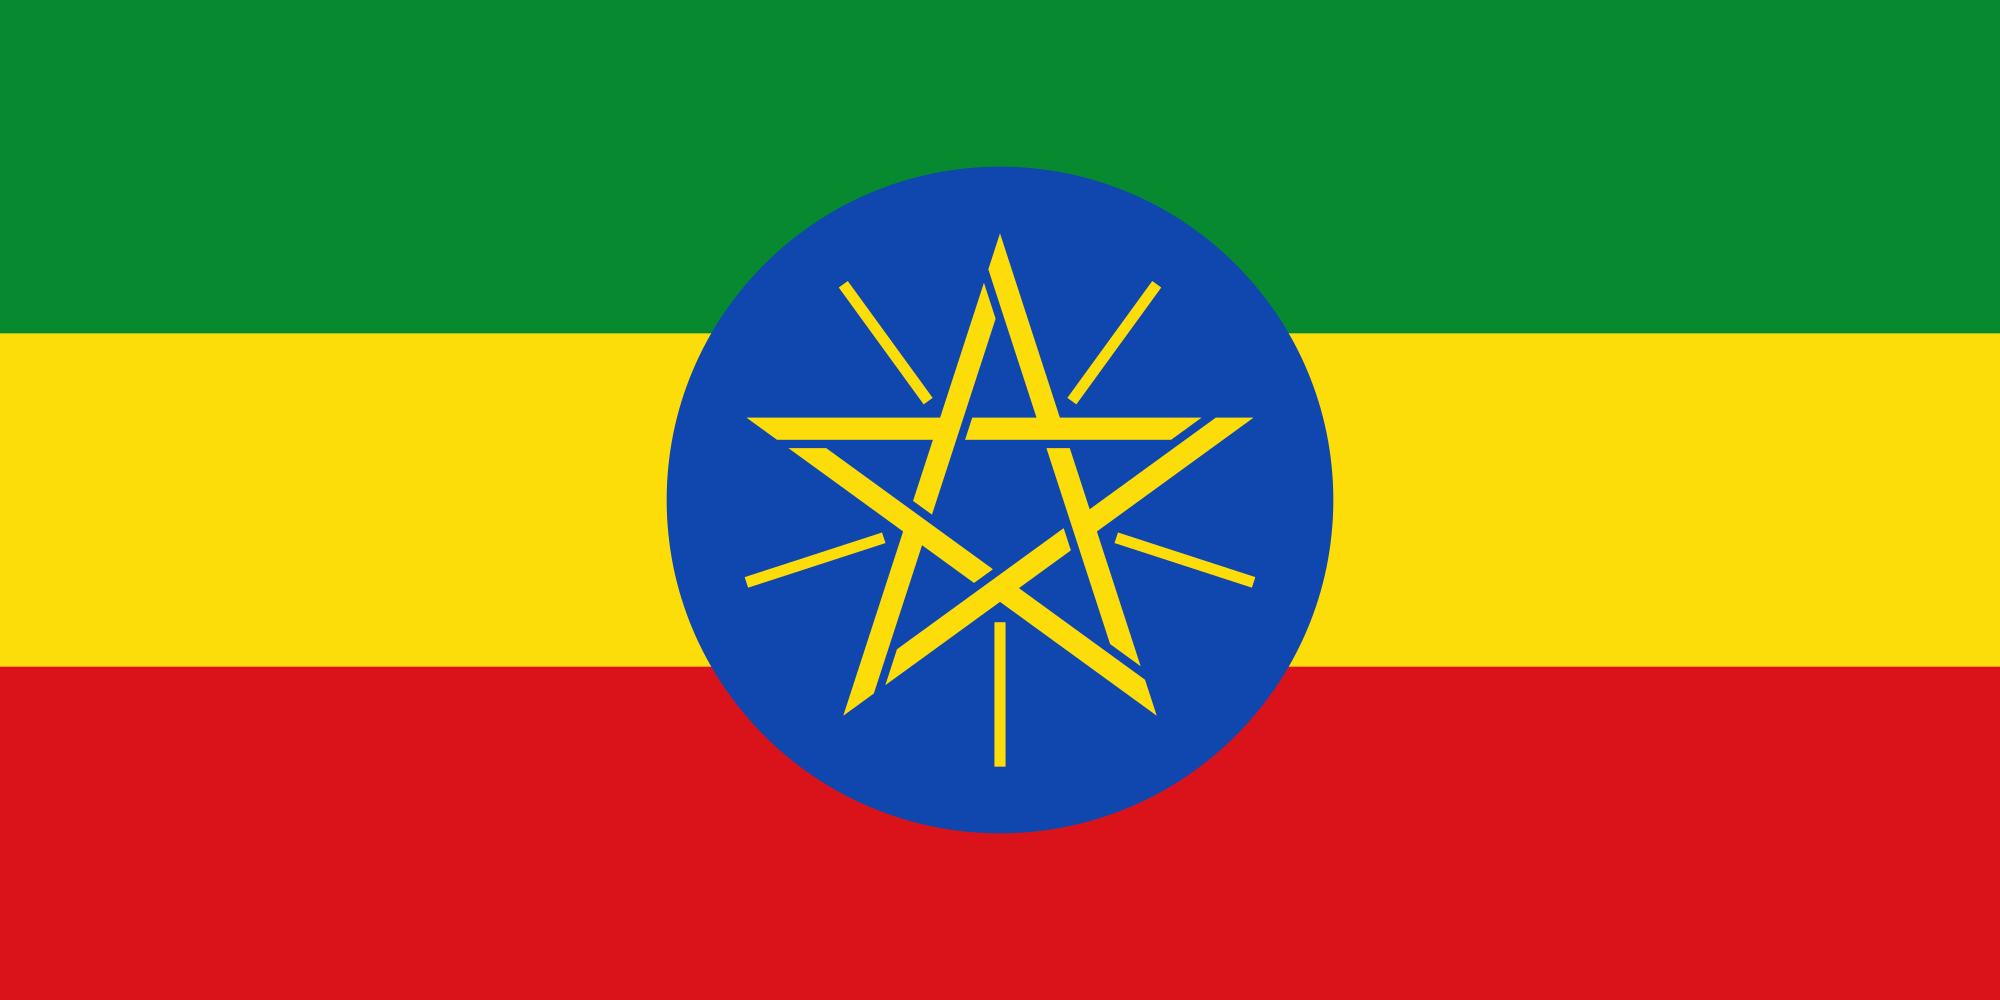 03. Government of Ethiopia